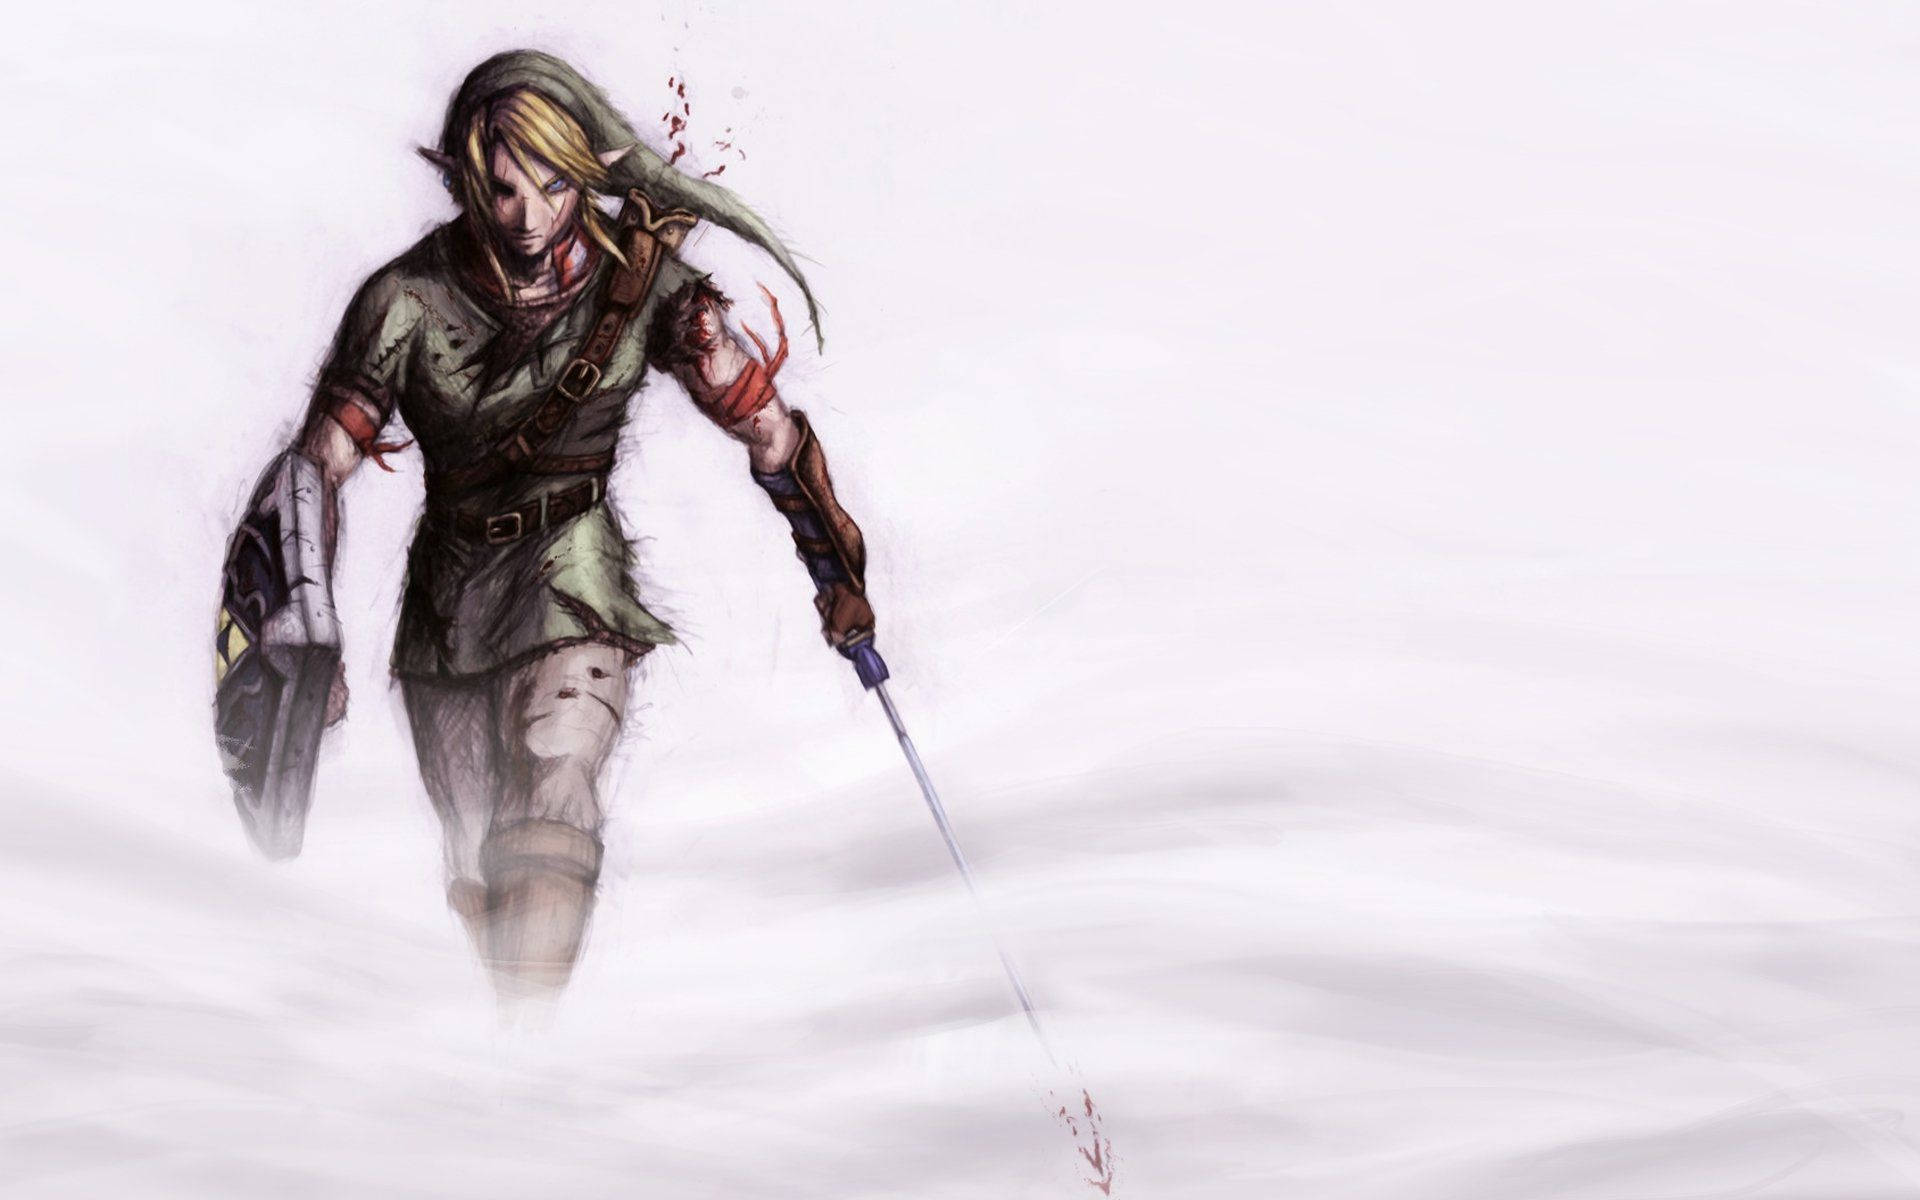 Link, the chosen hero of Hyrule Wallpaper